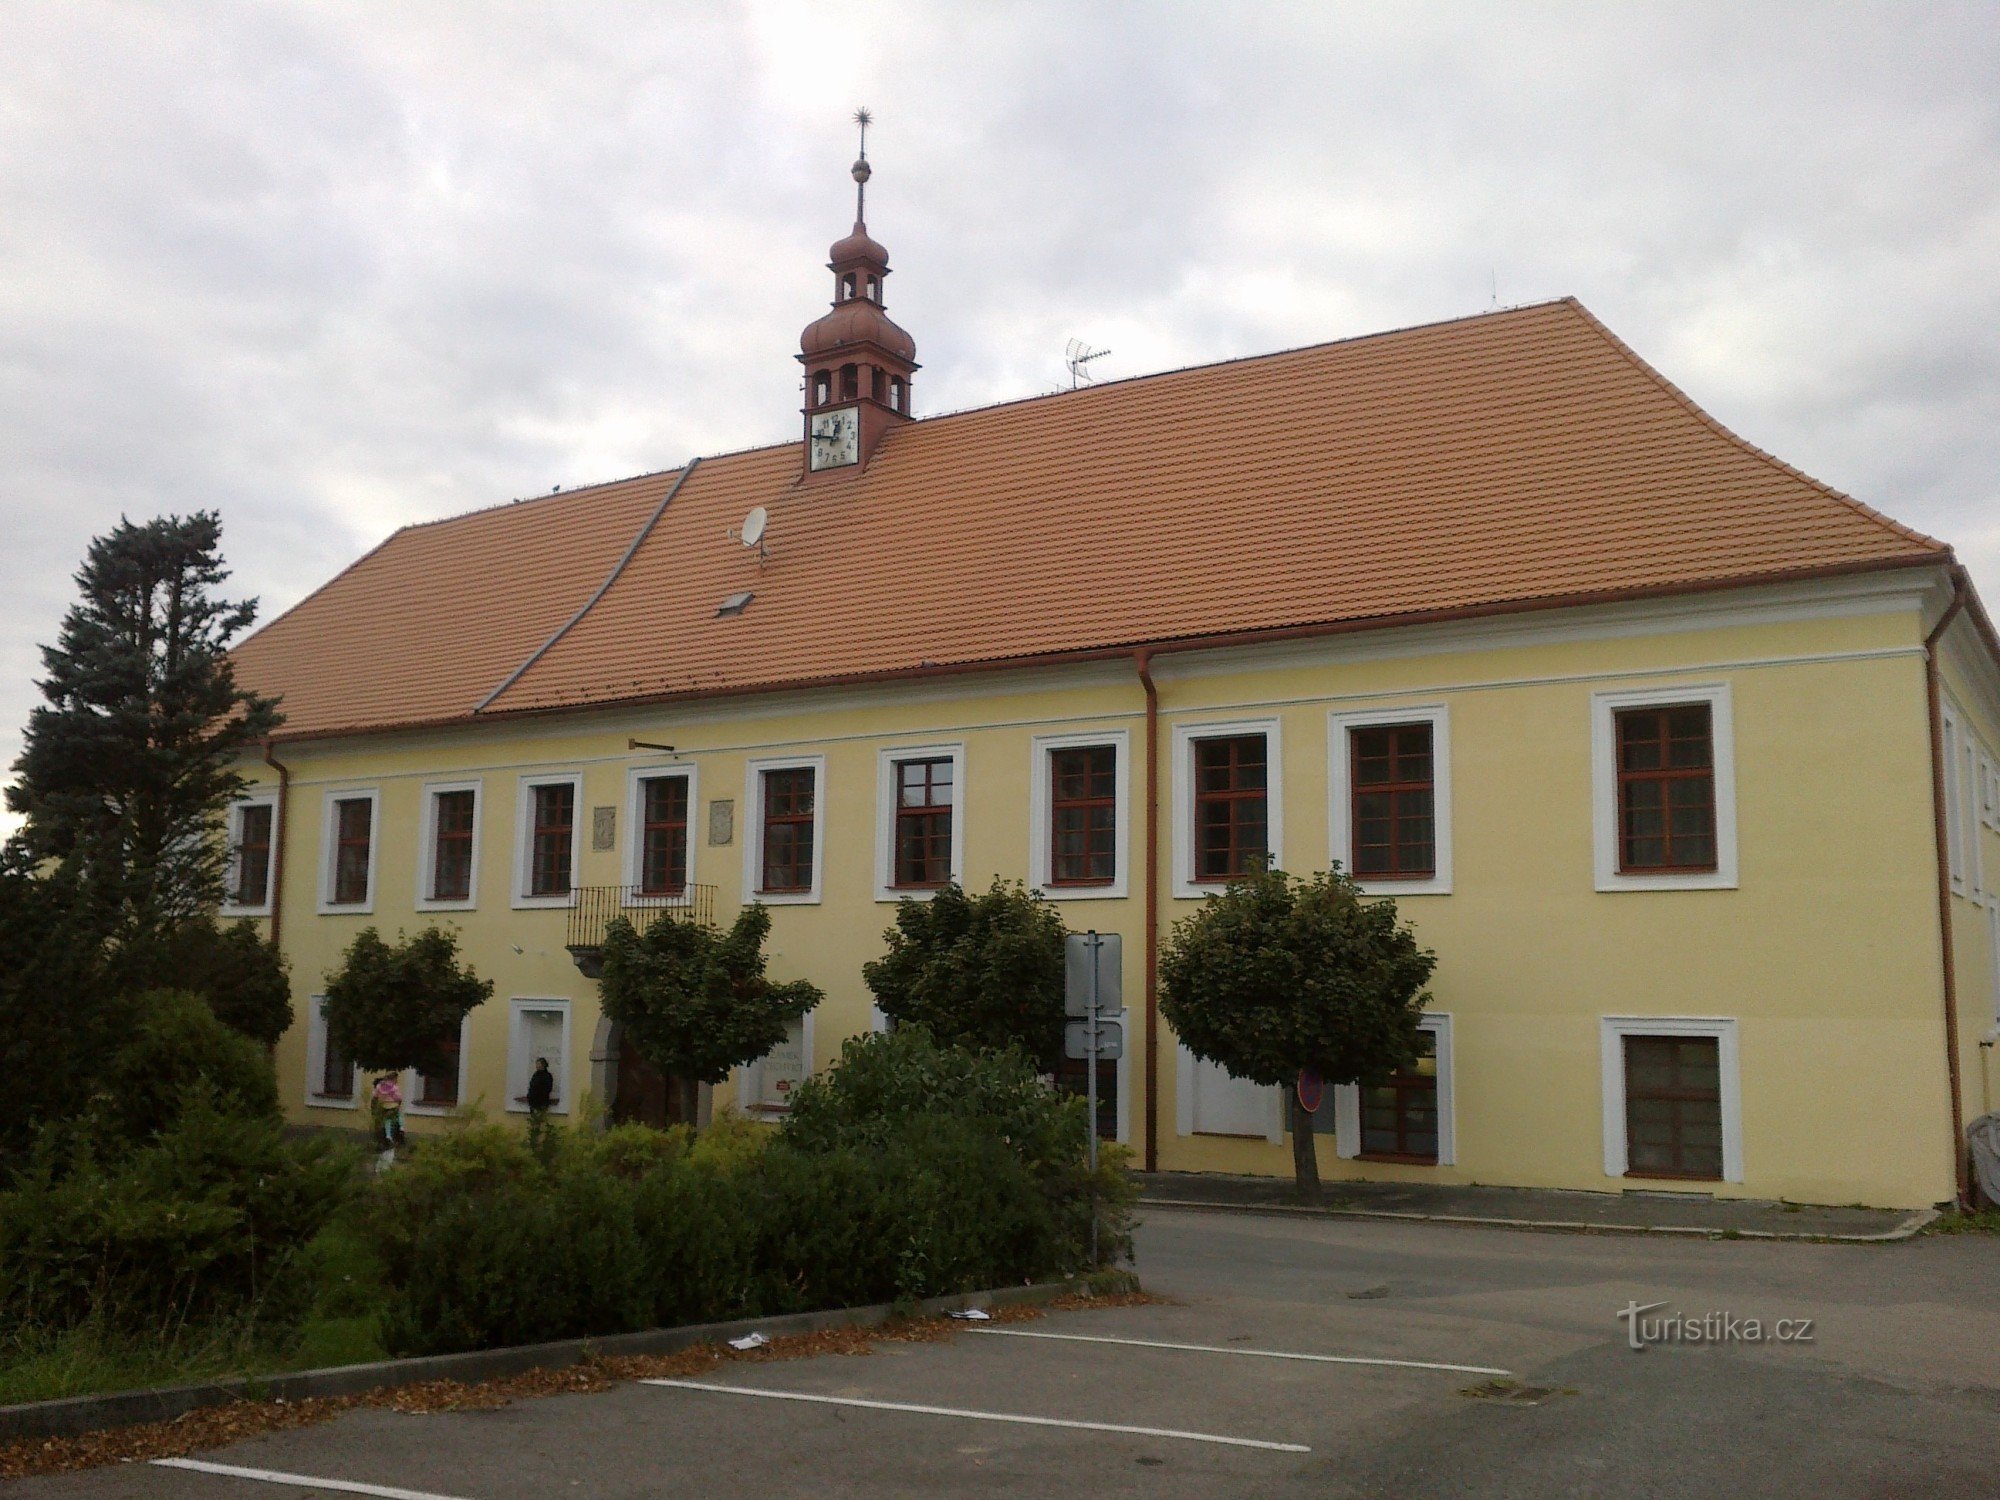 Thị trấn Čechtice.